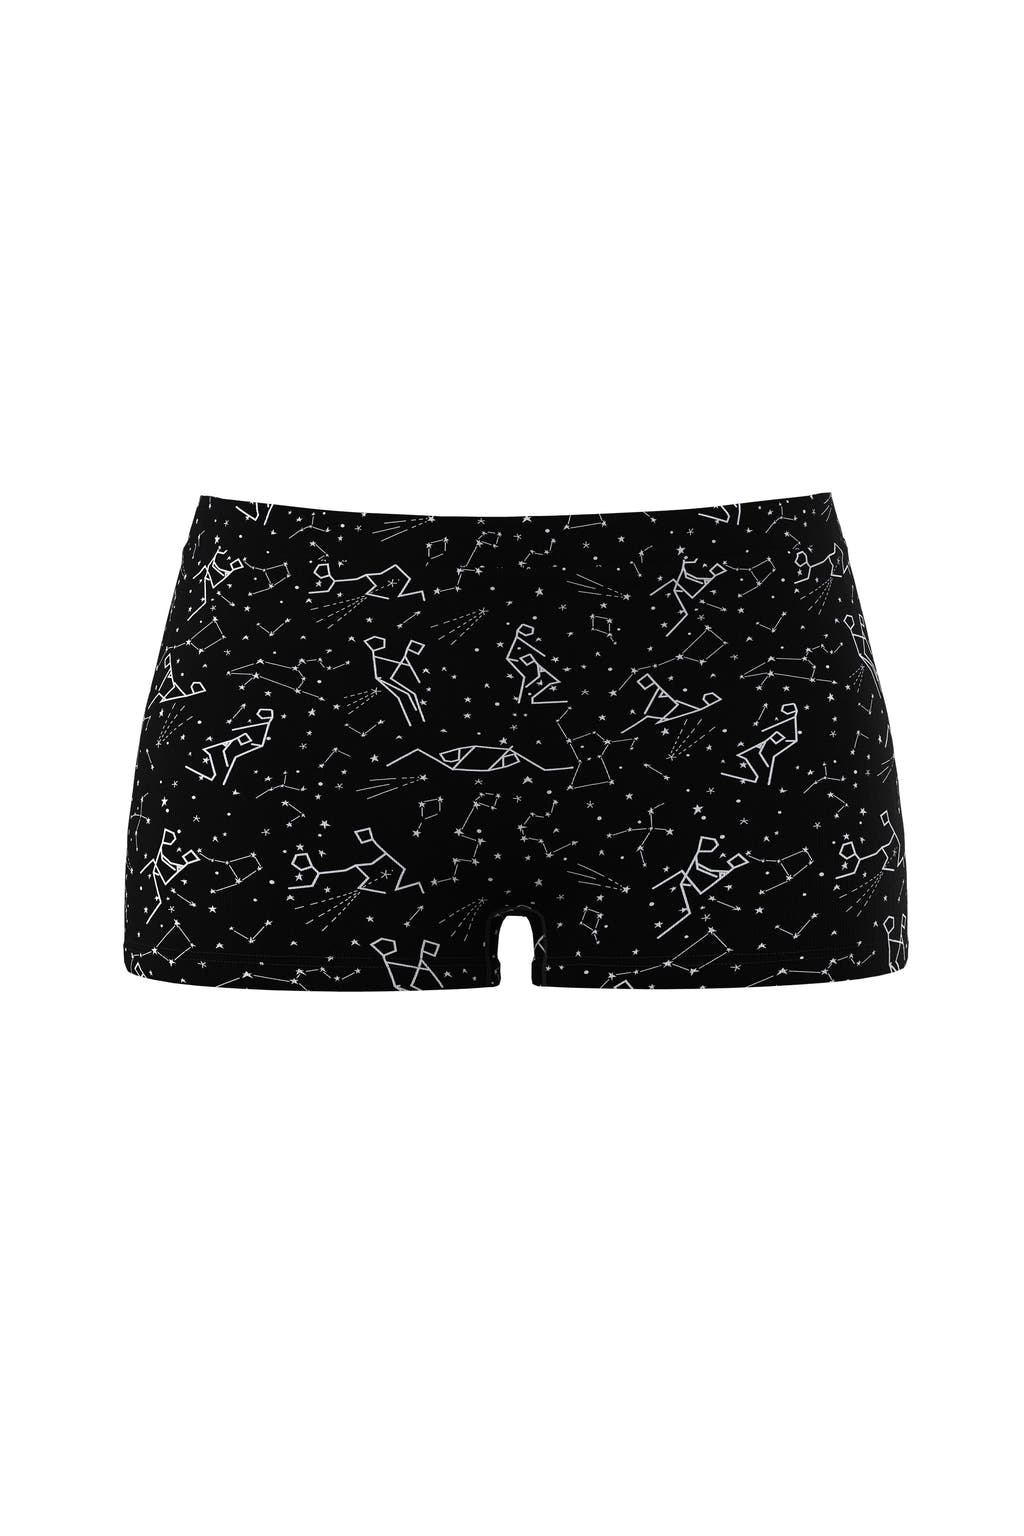 boyshorts star pattern underwear